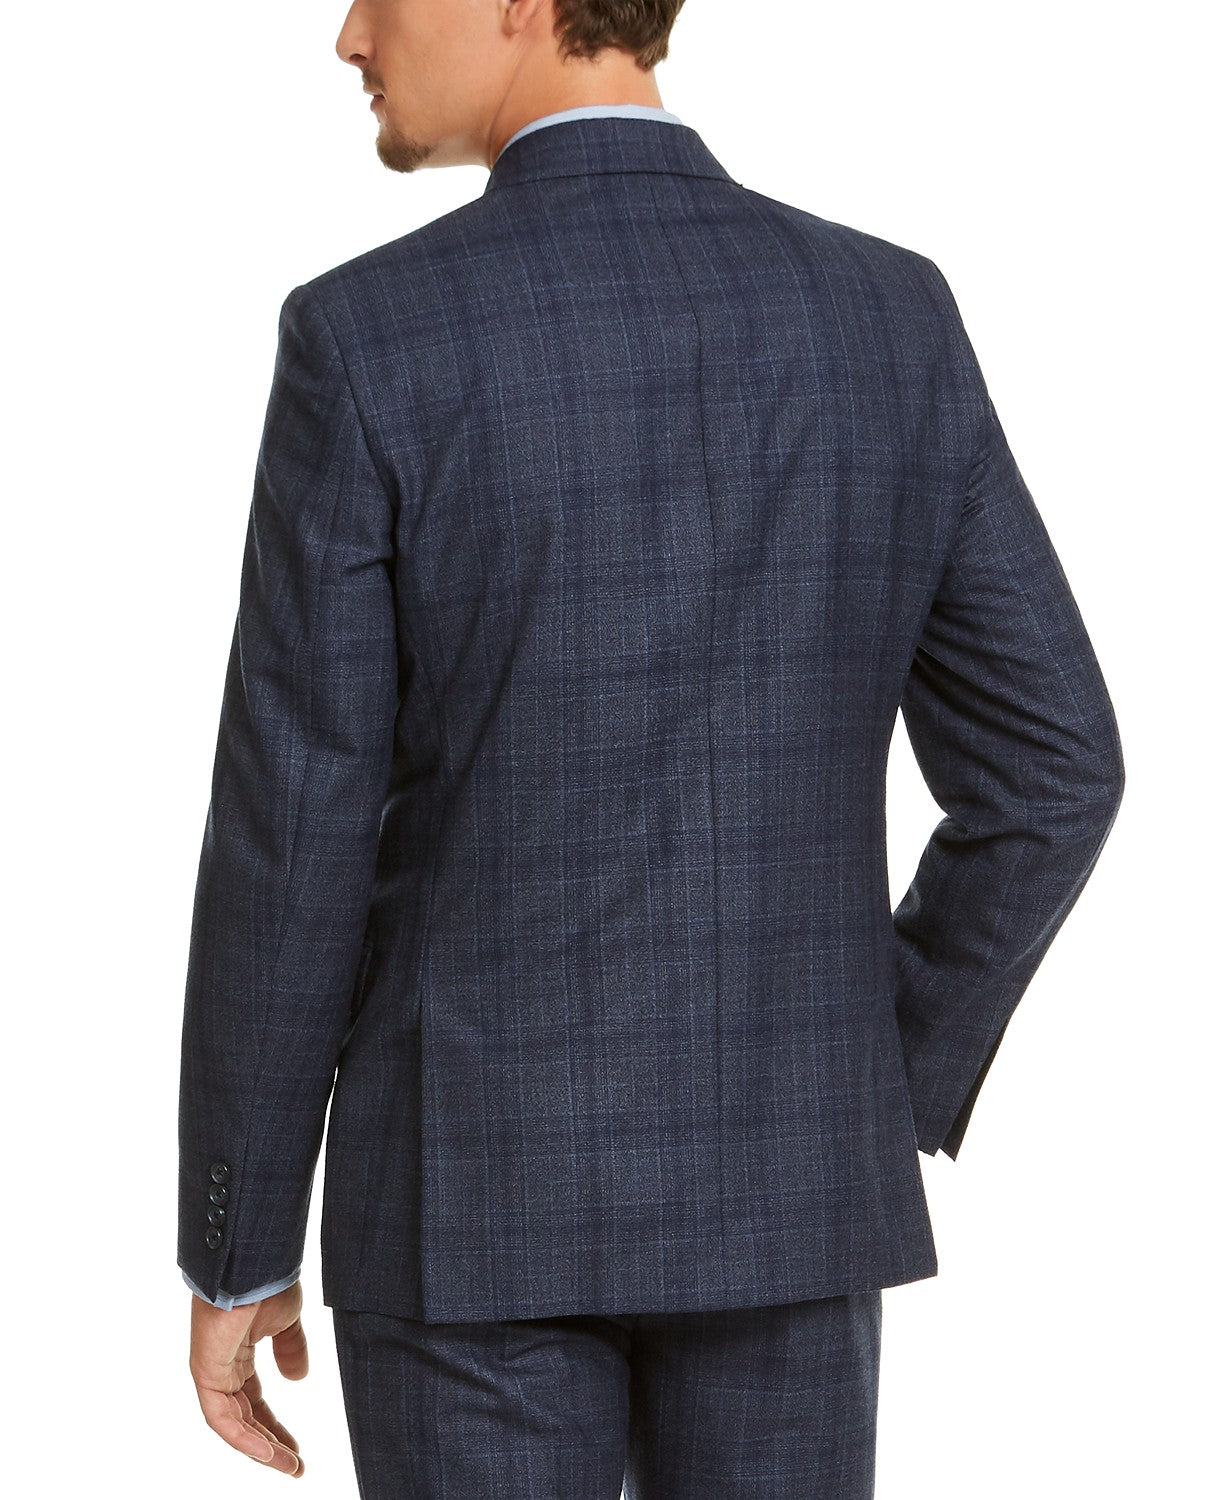 NWOT Calvin Klein Slim Fit Blue Check Plaid Blazer Sport Coat 48R 48  Regular